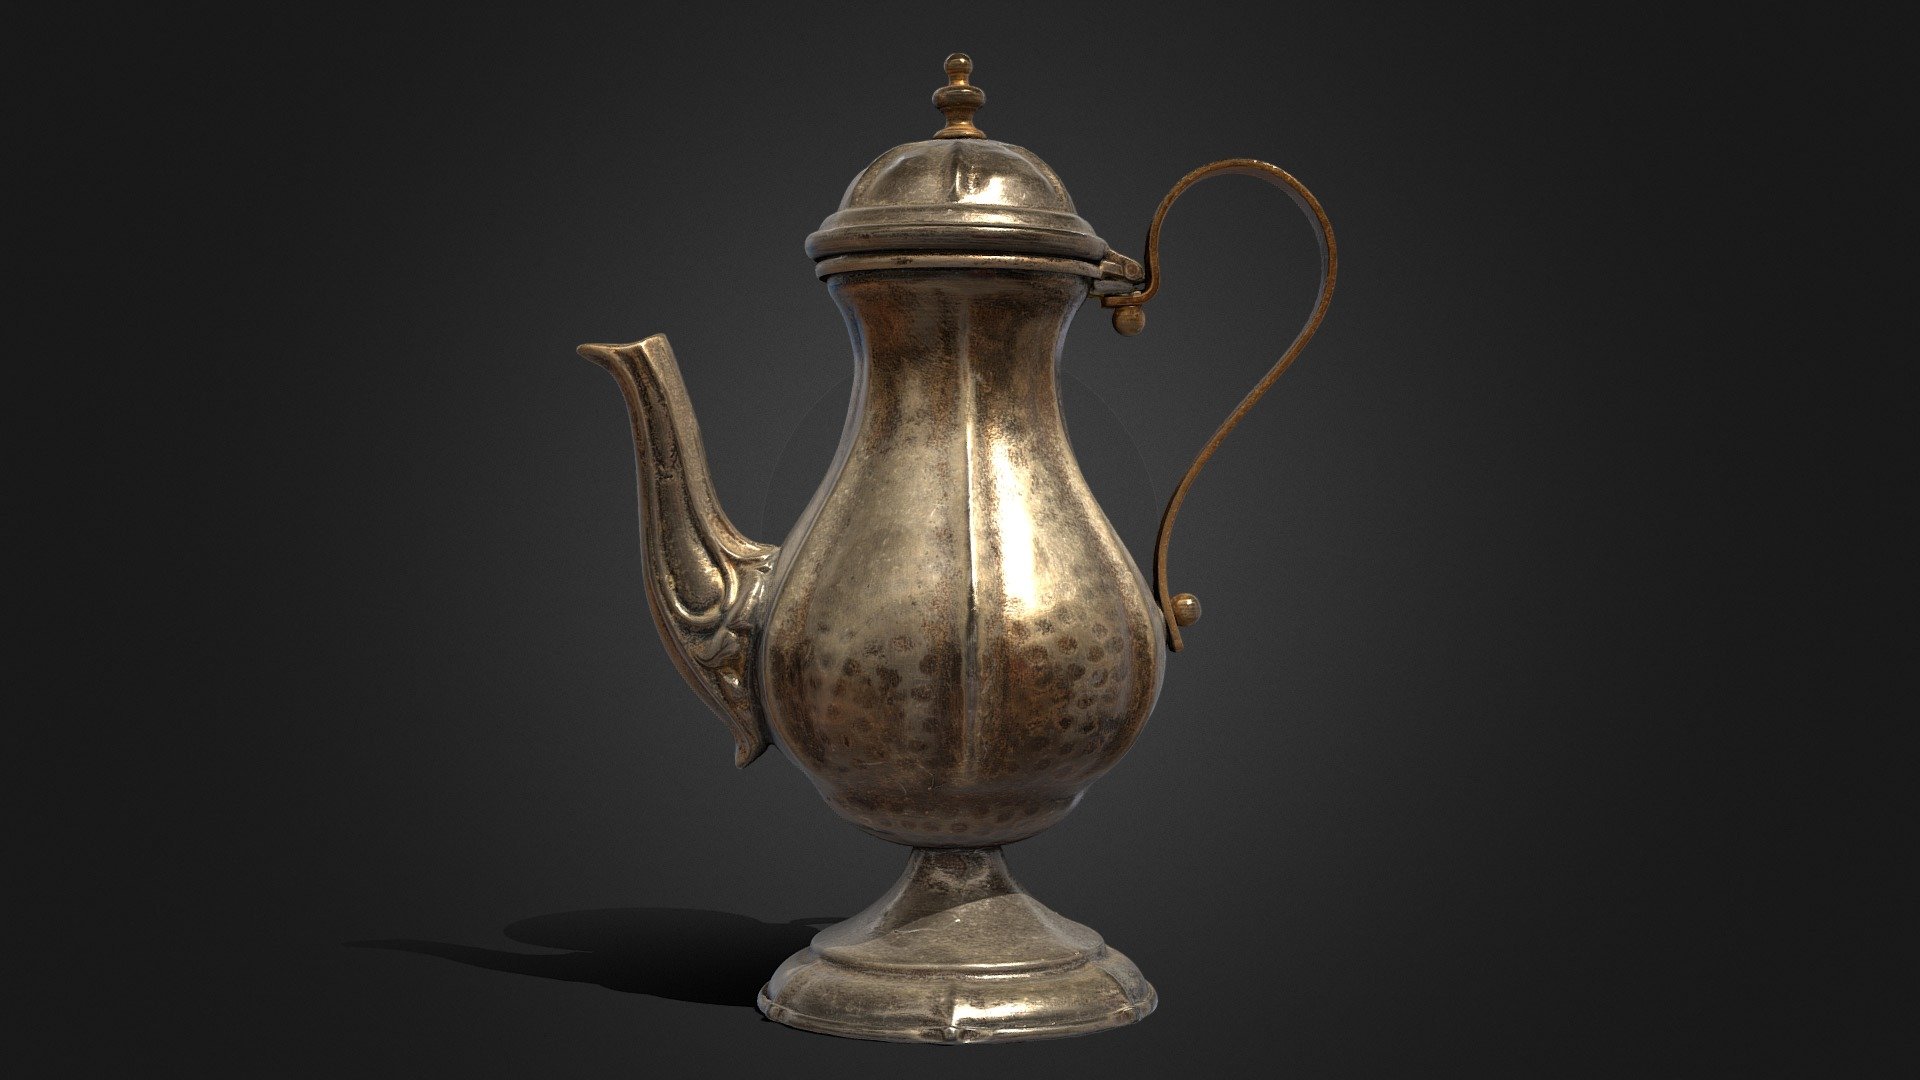 Old Dirty Broken Teapot .::RAWscan::.

Photogrammetry scan - Old Dirty Broken Teapot .::RAWscan:: 3d model